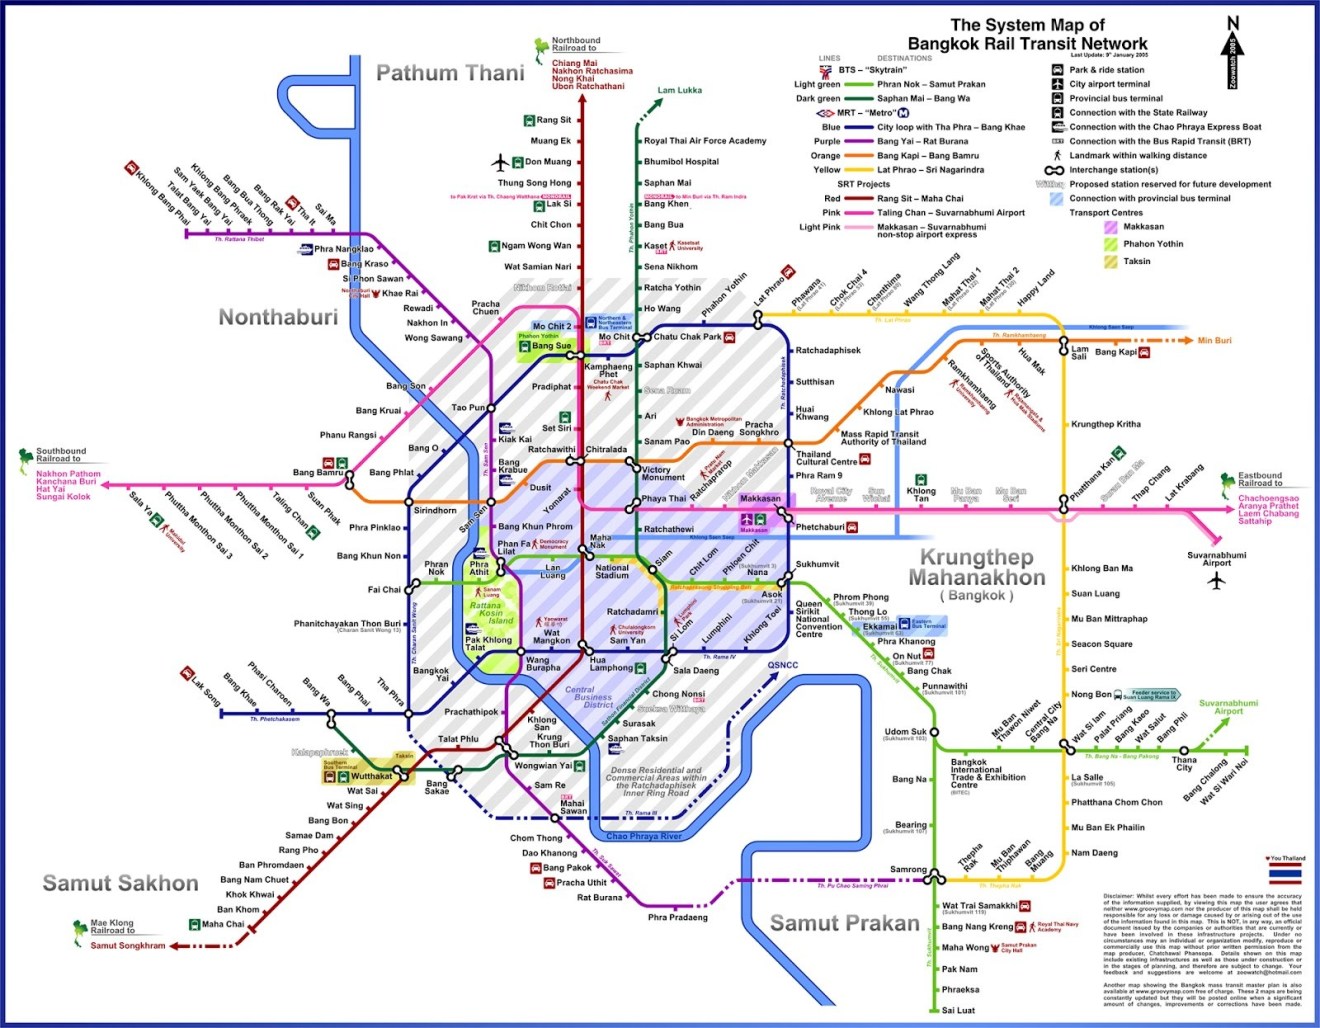 MRT to start passenger Test Runs late July on Blue Line extension